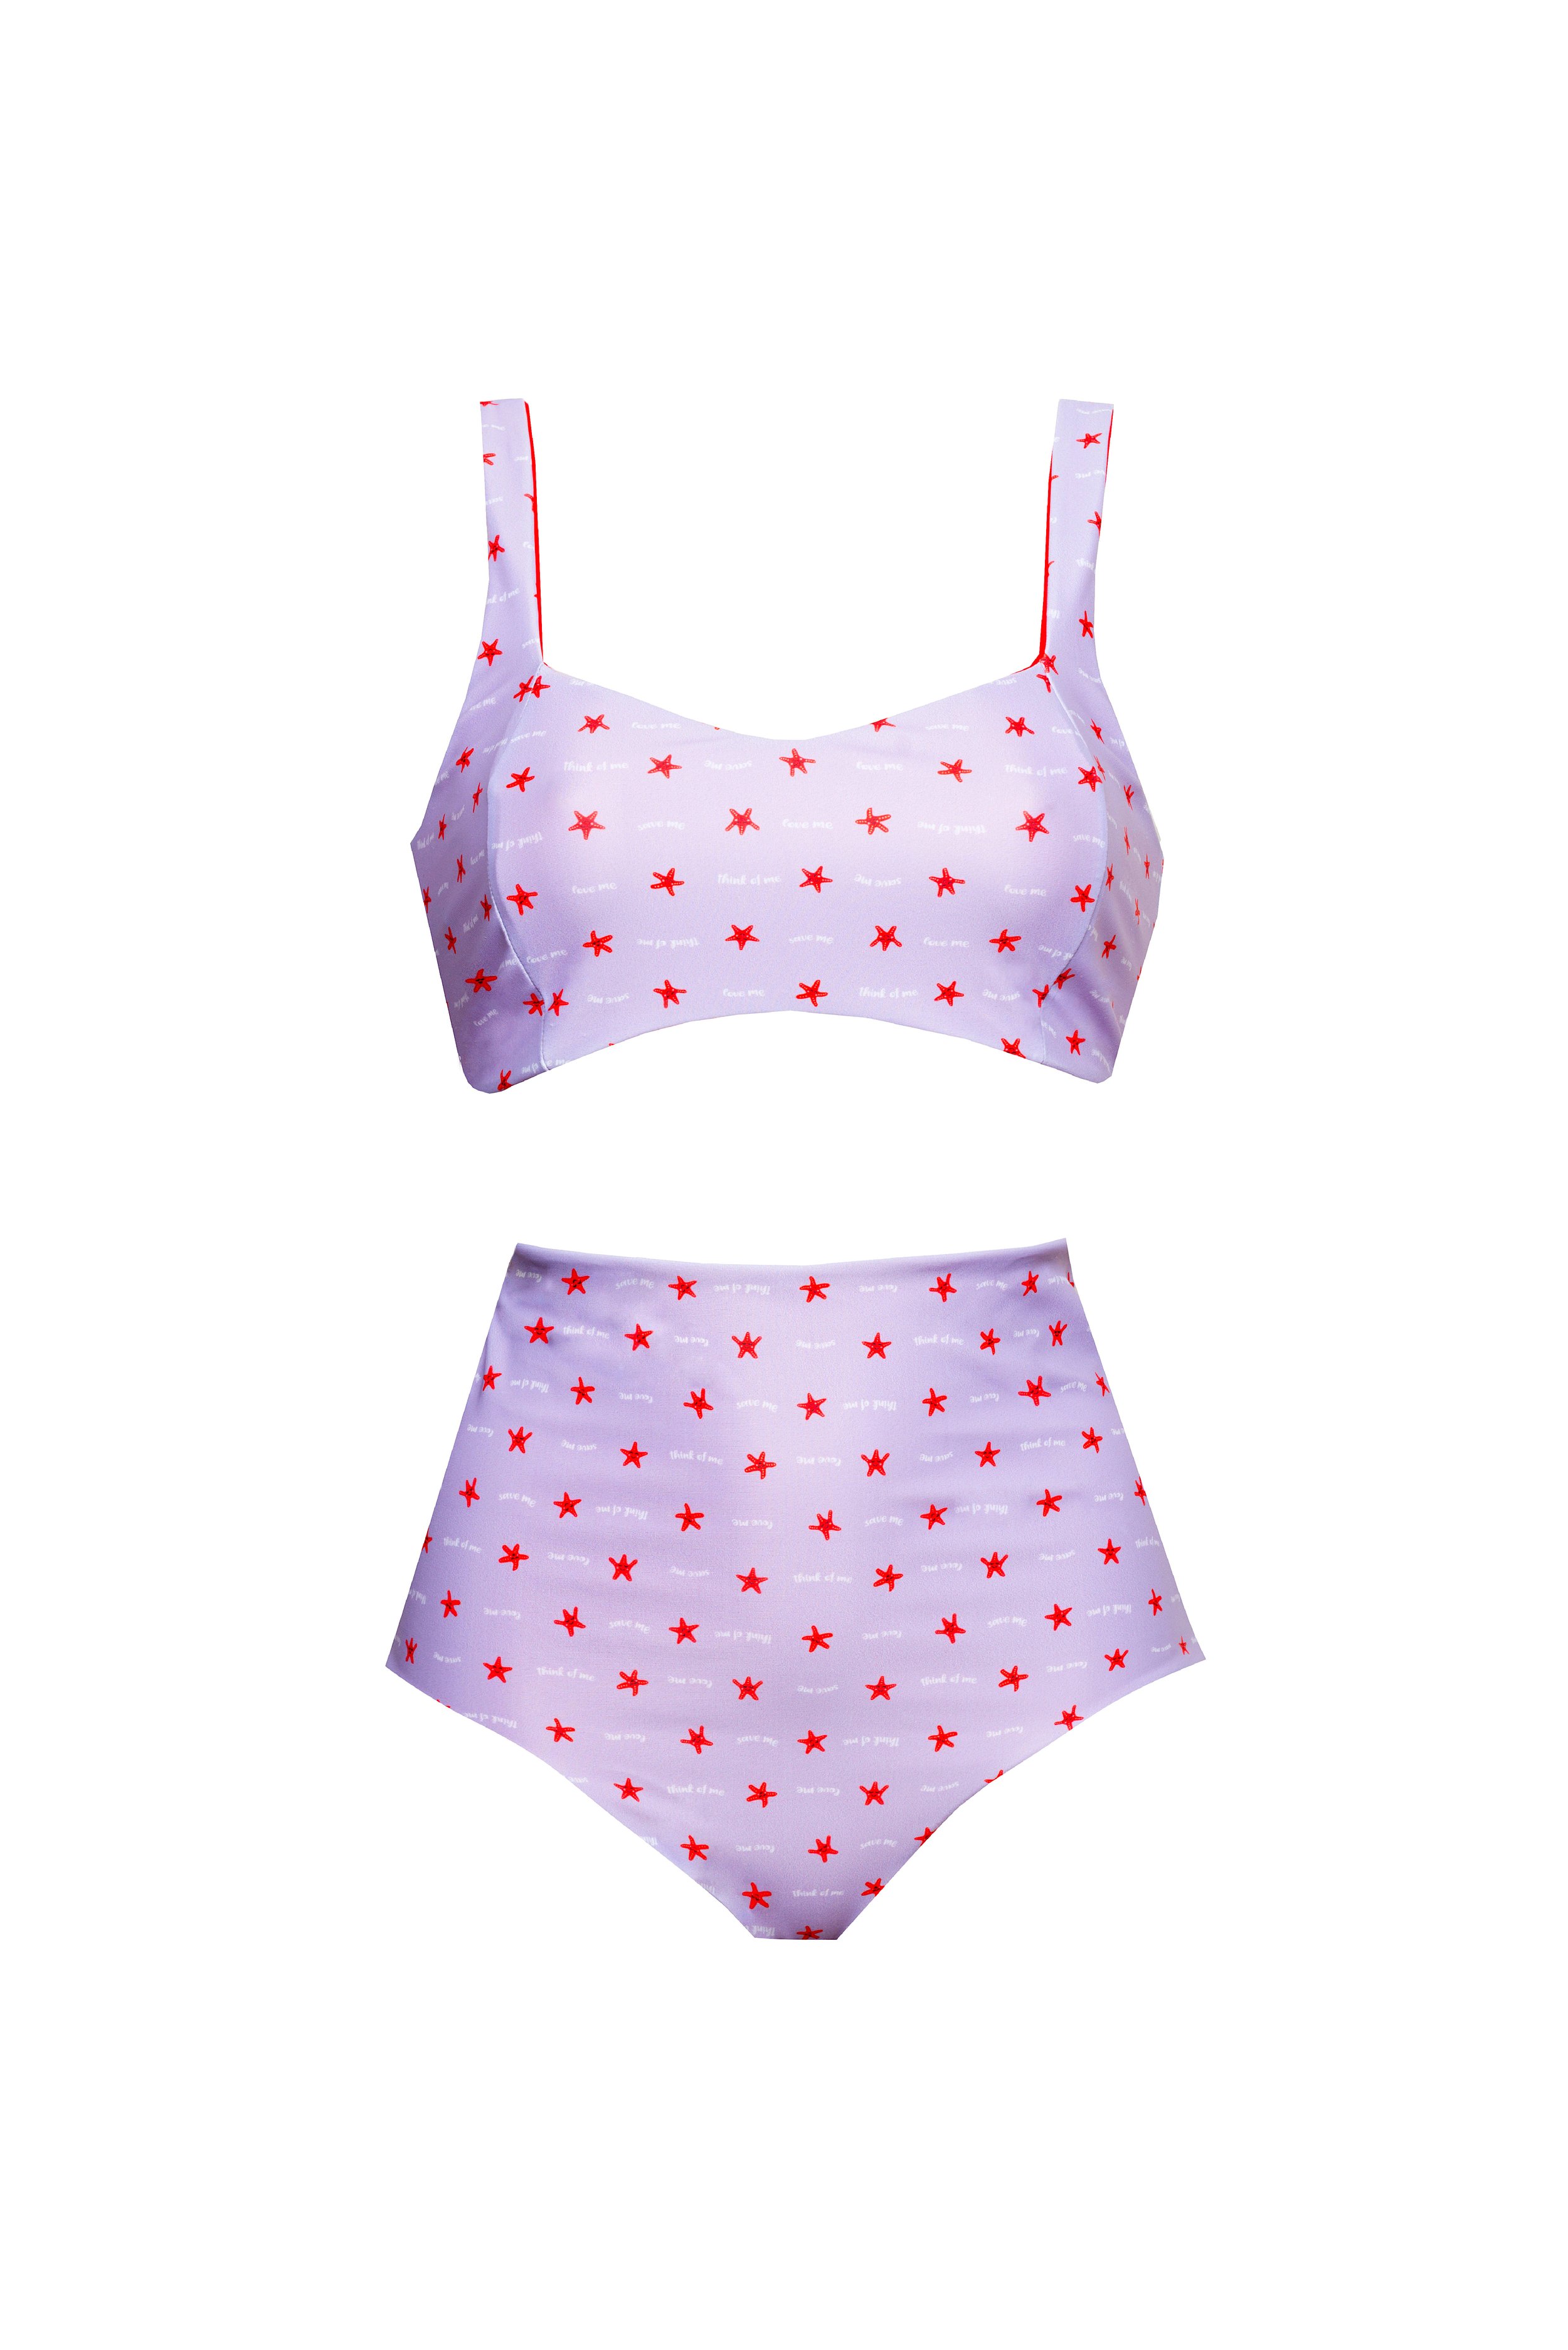 https://www.pollyswimwear.com/donna/eva-bikini-woman-high-waist-lavender-stars